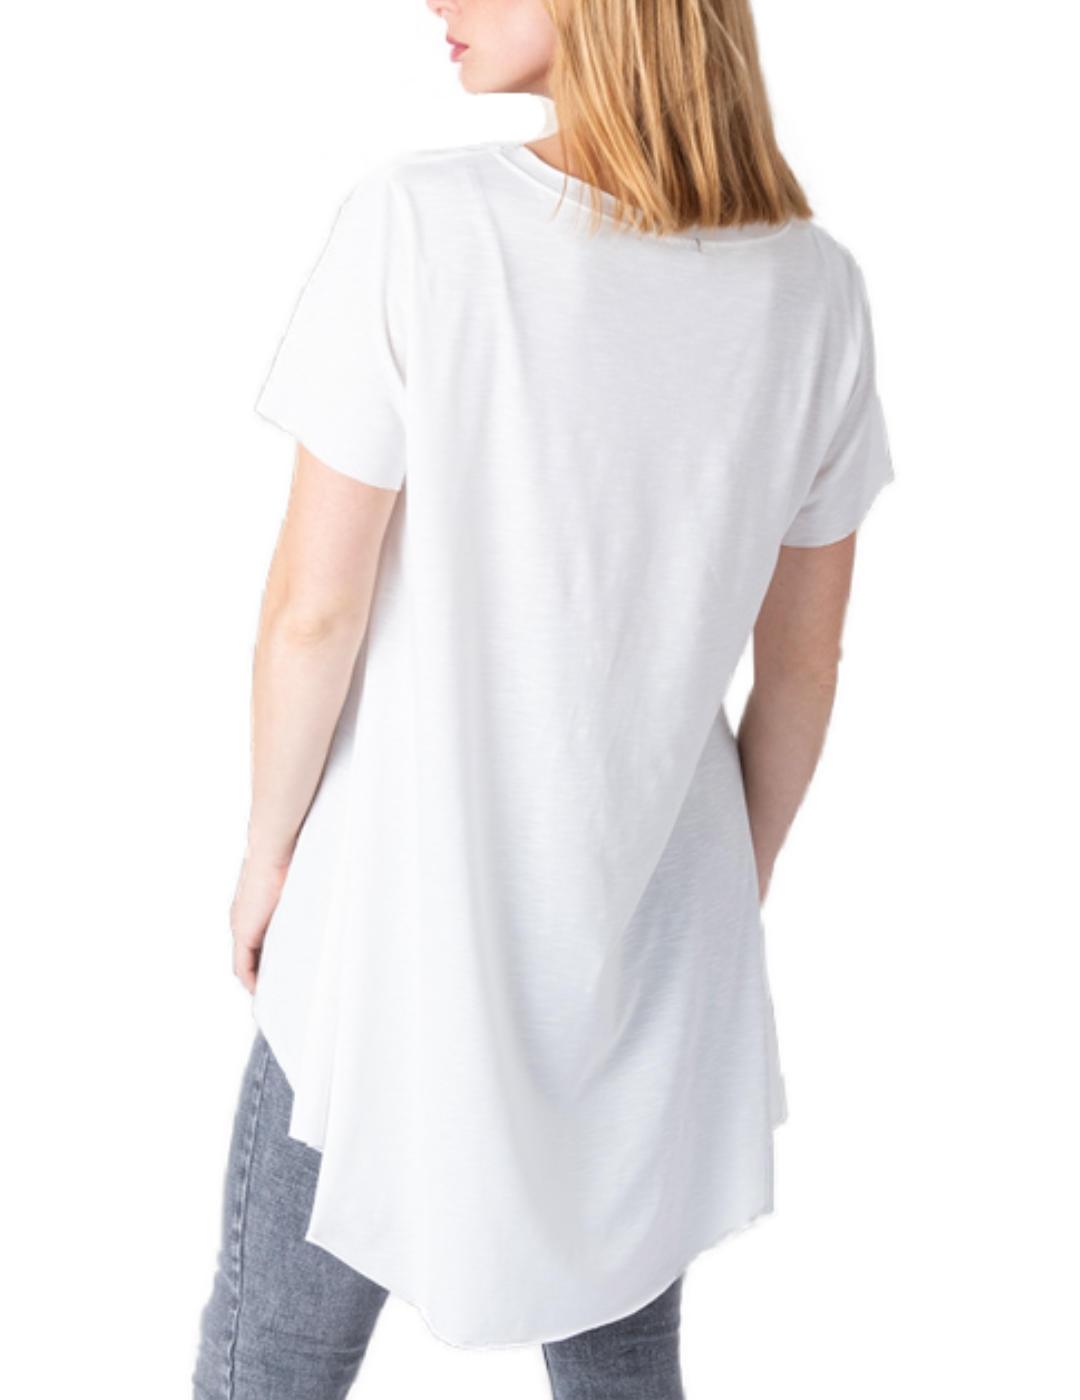 Camiseta Animosa Aloha Hawaii blanco manga corta para mujer